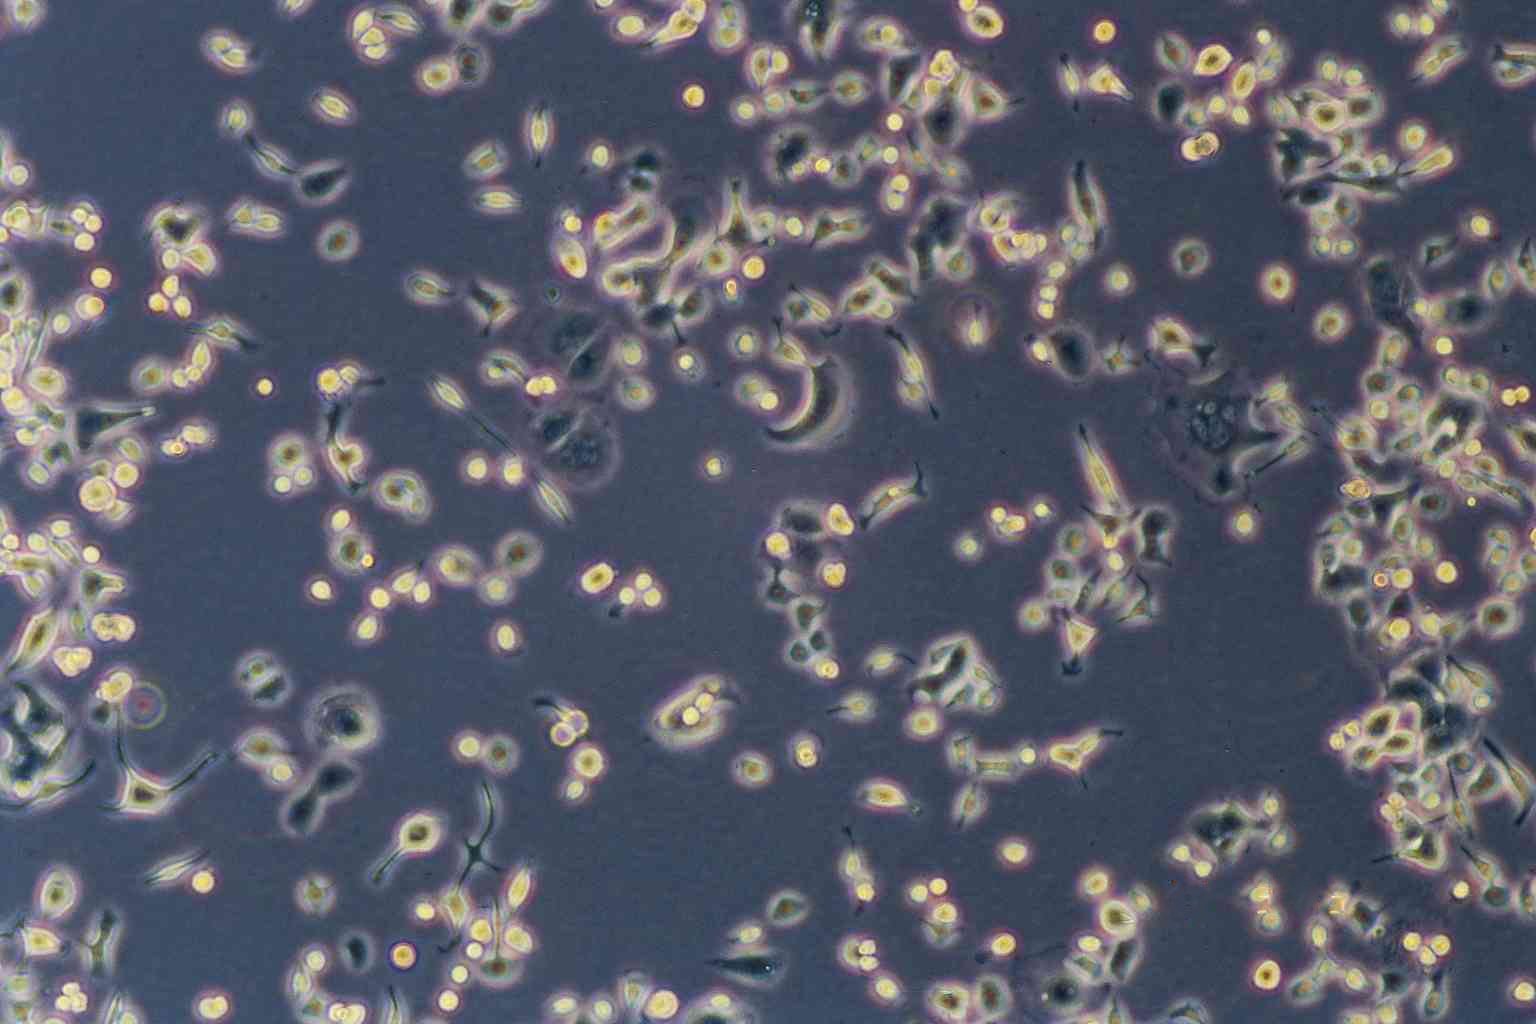 KMM-1 Cells|人多发性骨髓瘤细胞系,KMM-1 Cells